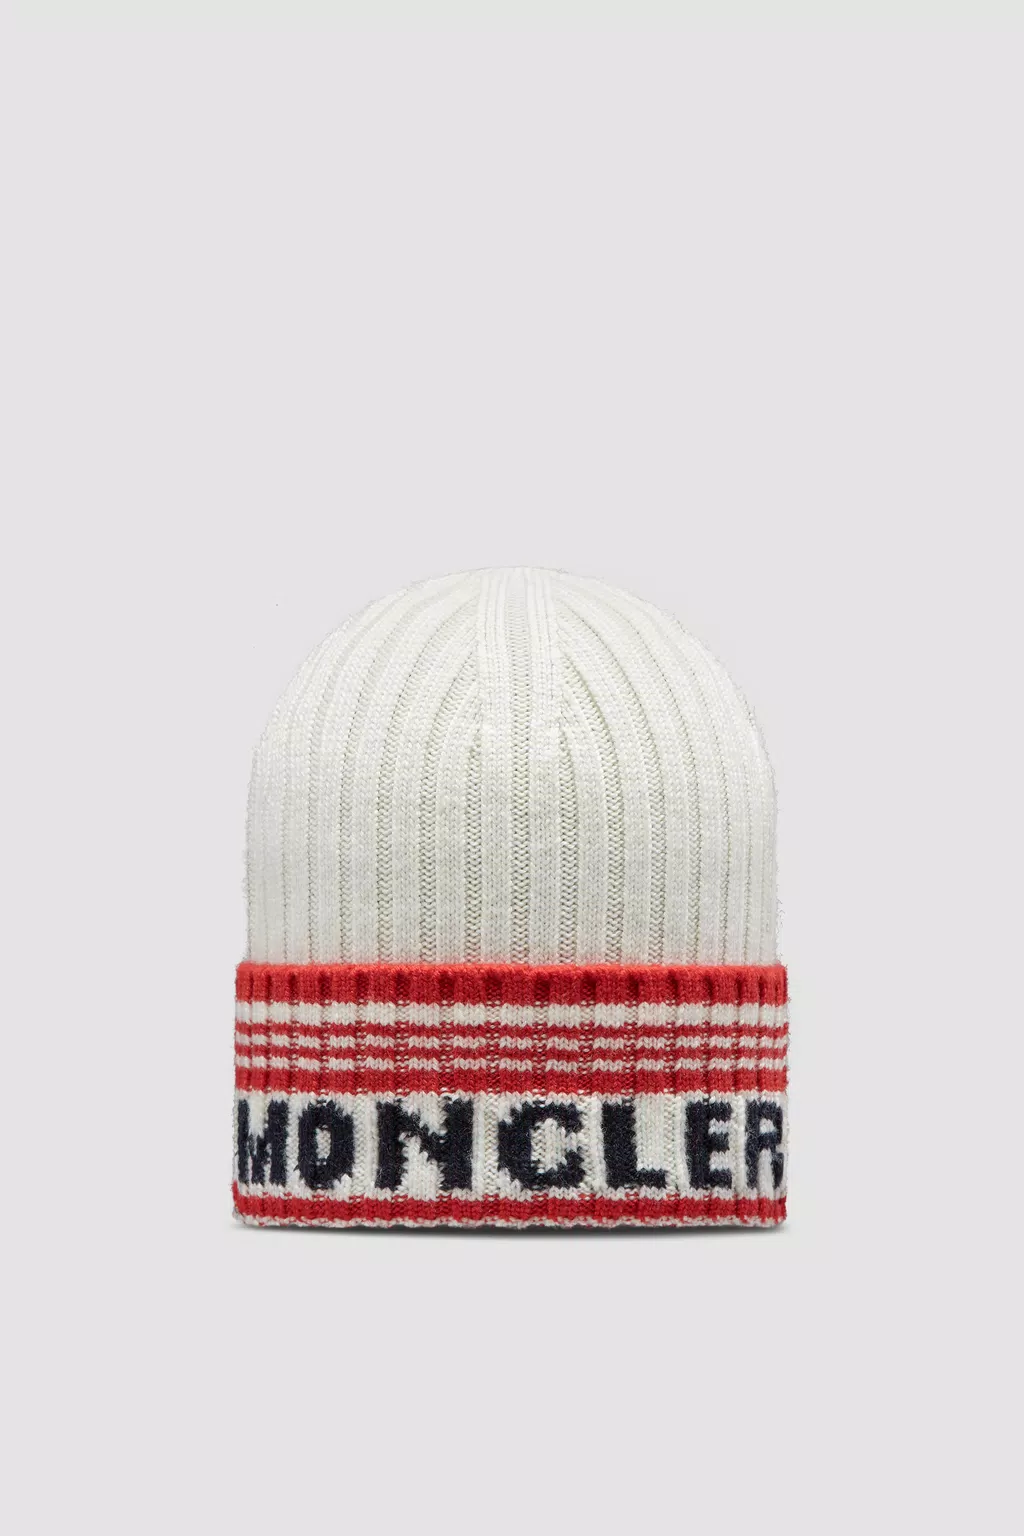 Hats, Baseball Caps, Bucket Hats & Beanies for Men | Moncler US